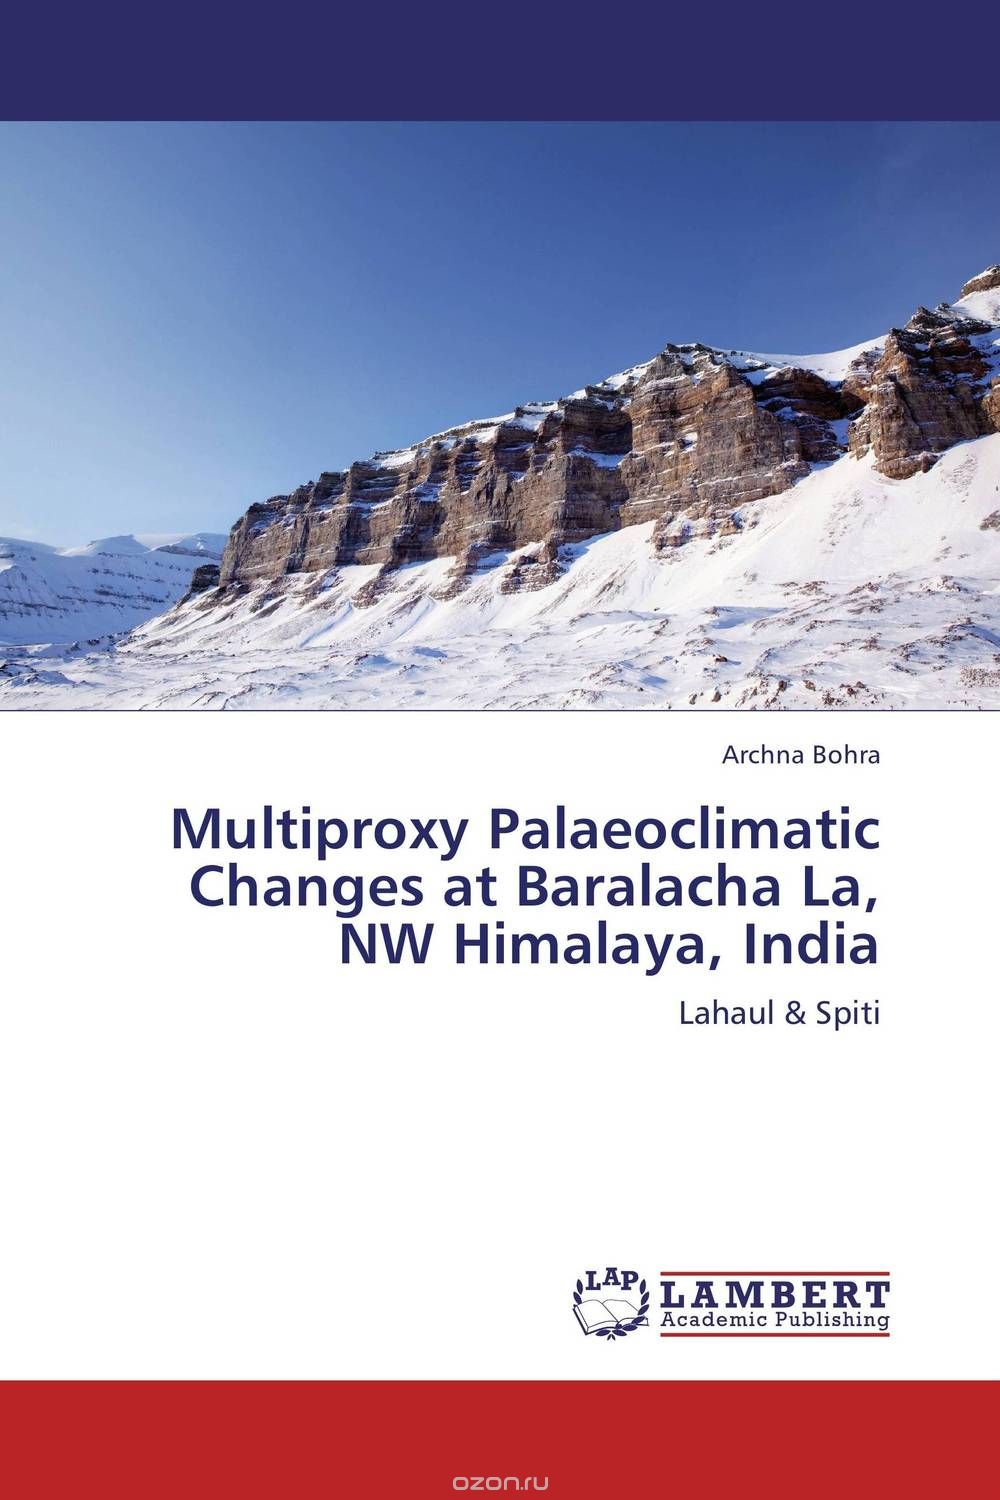 Скачать книгу "Multiproxy Palaeoclimatic Changes at Baralacha La, NW Himalaya, India"